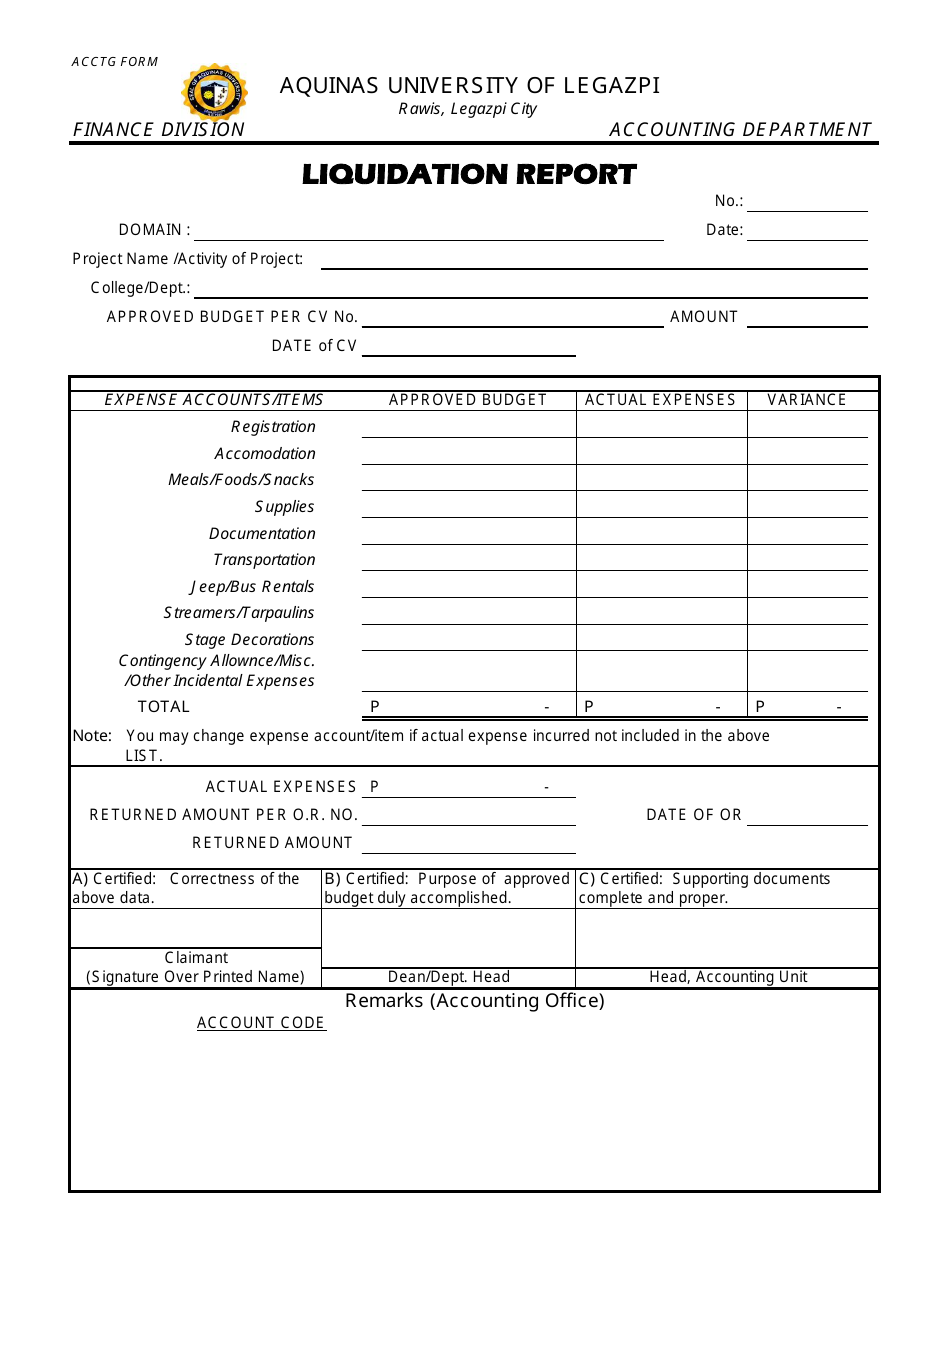 Liquidation Report Form - Aquinas University of Legazpi, Page 1